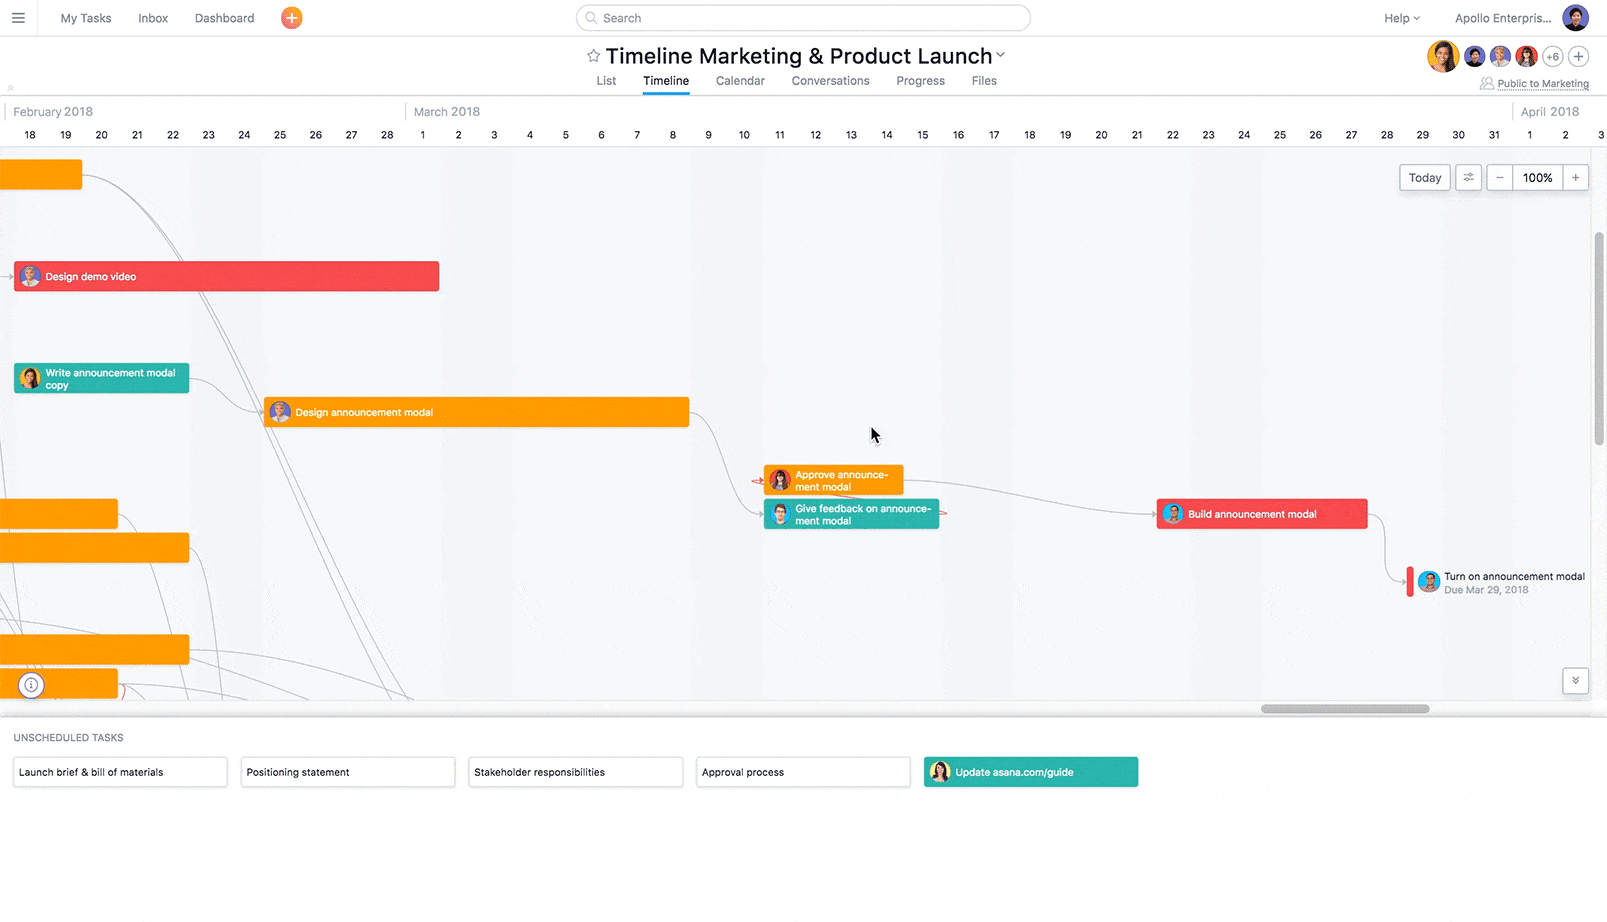 How to move tasks in Asana Timeline